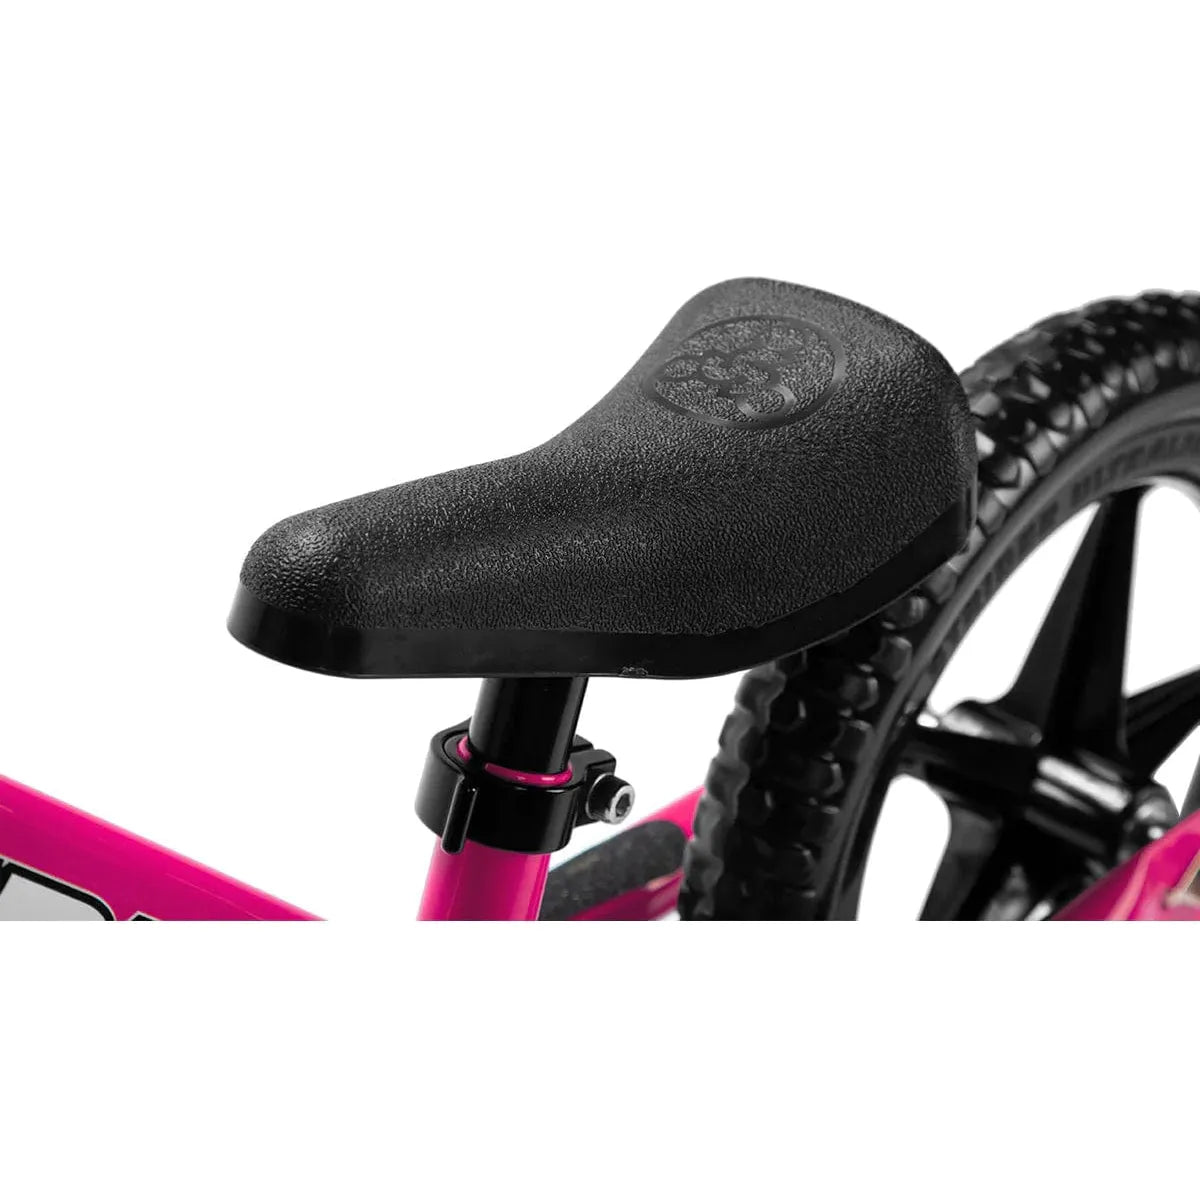 Strider Classic 12 inch Balance Bike - Pink seat close up